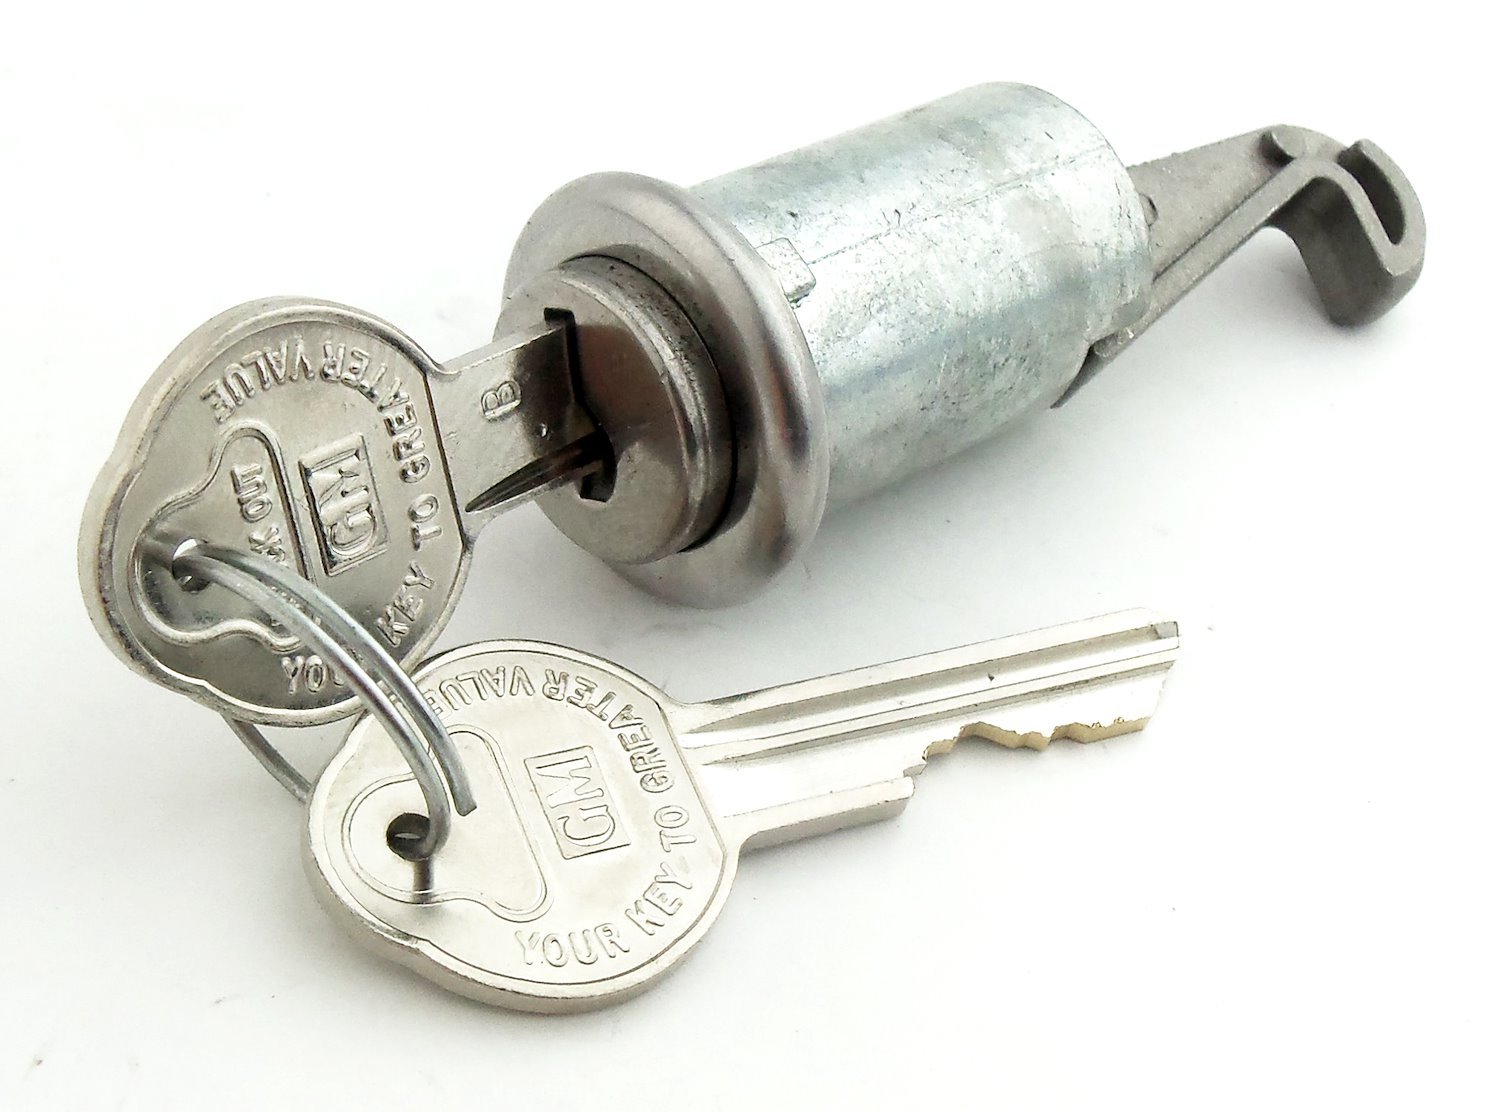 Glovebox Lock Set Fits Select 1964-1968 GM Models [Original Pearhead Keys]